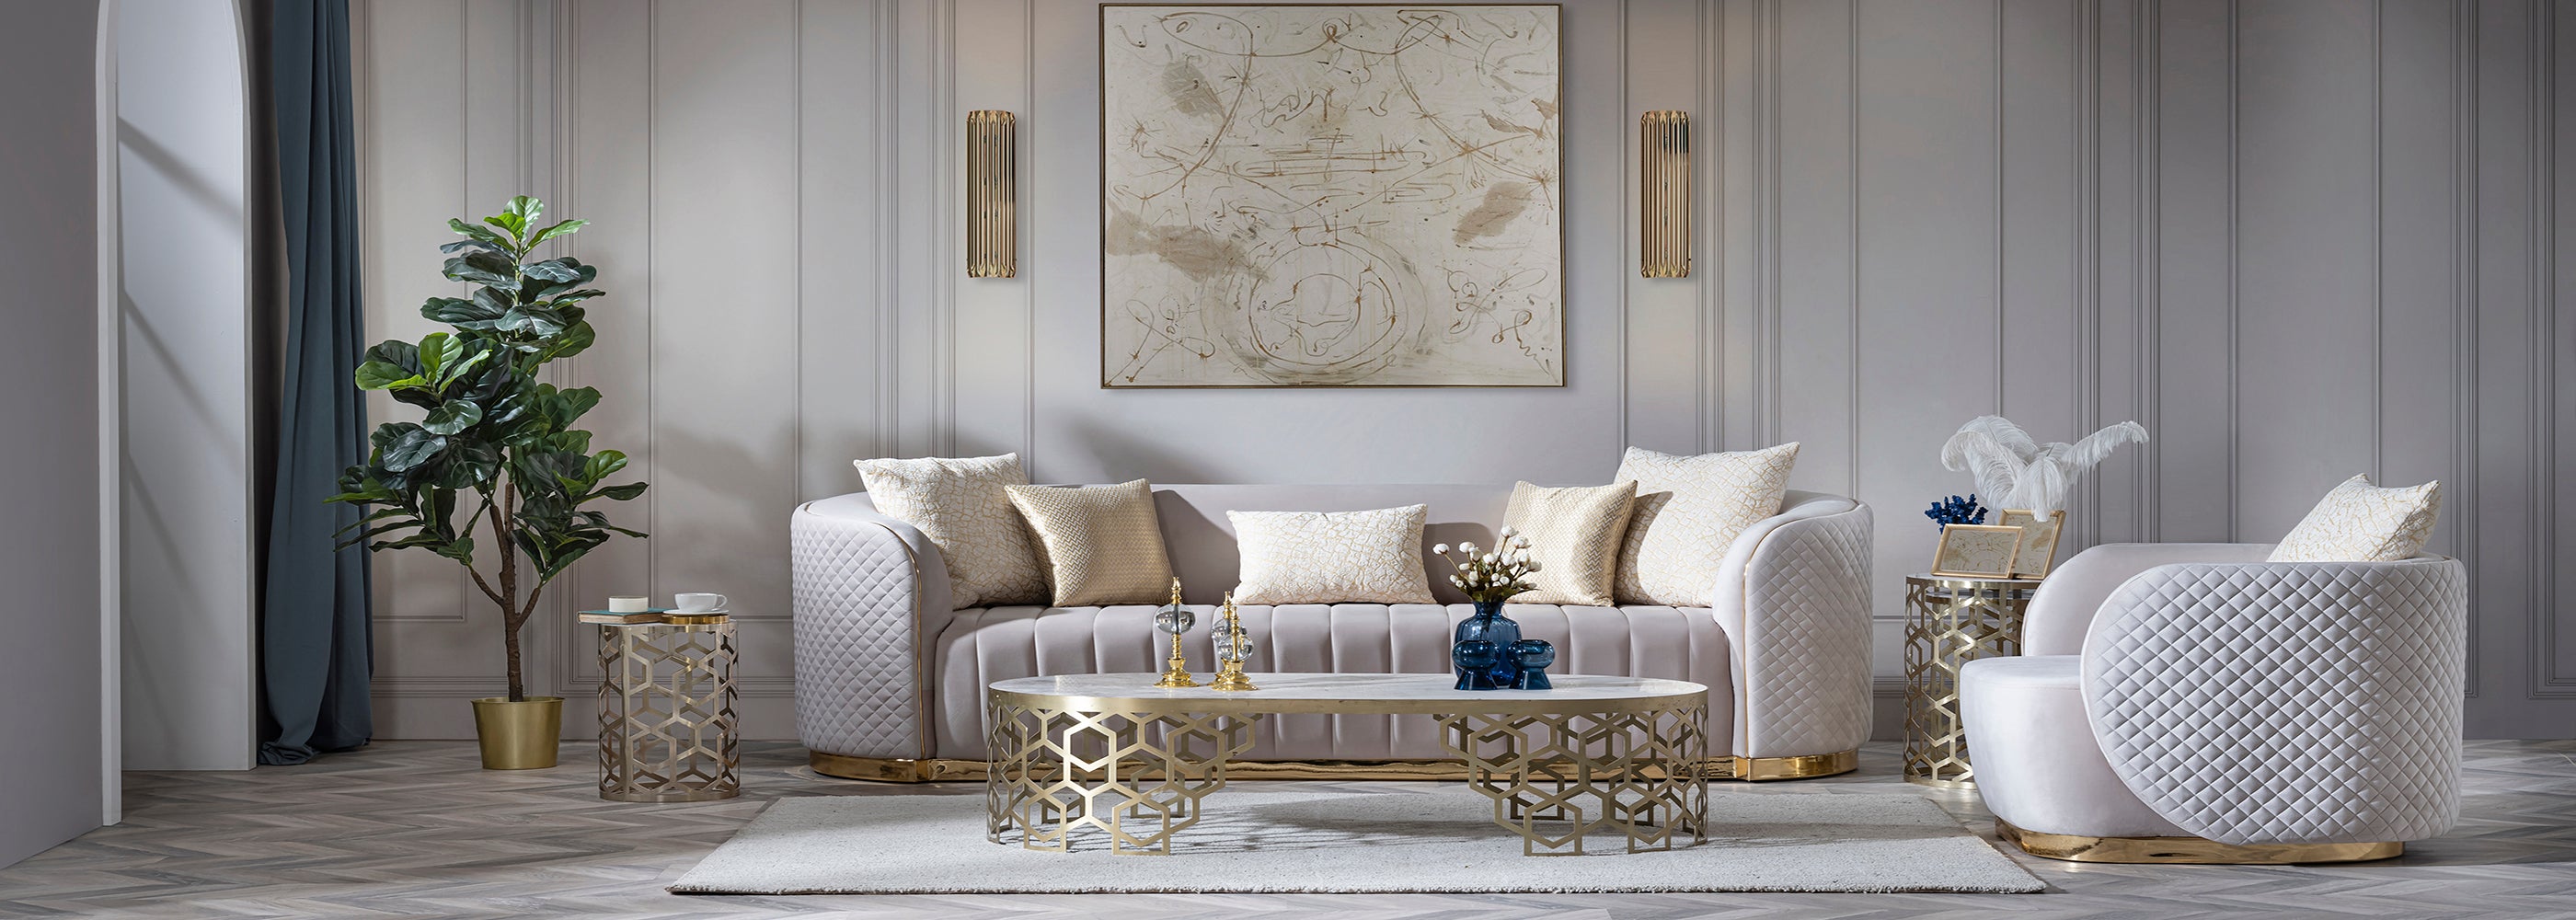 luxury sofas, sofa selection, modern and sleek furniture 